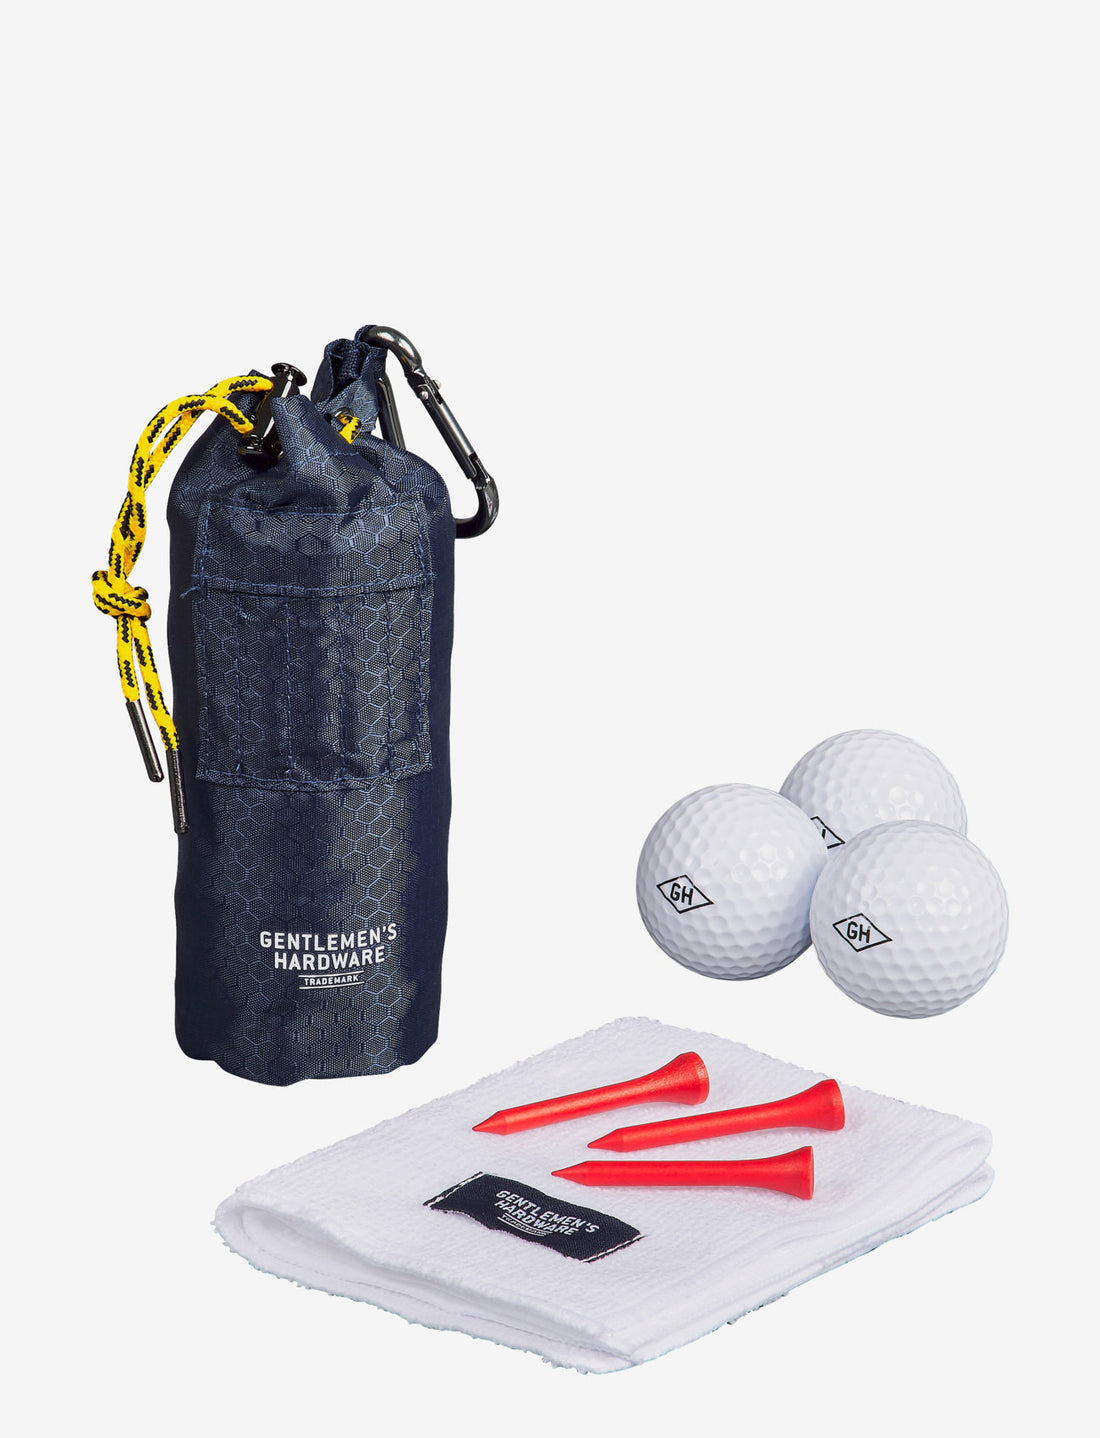 Golf ball kits